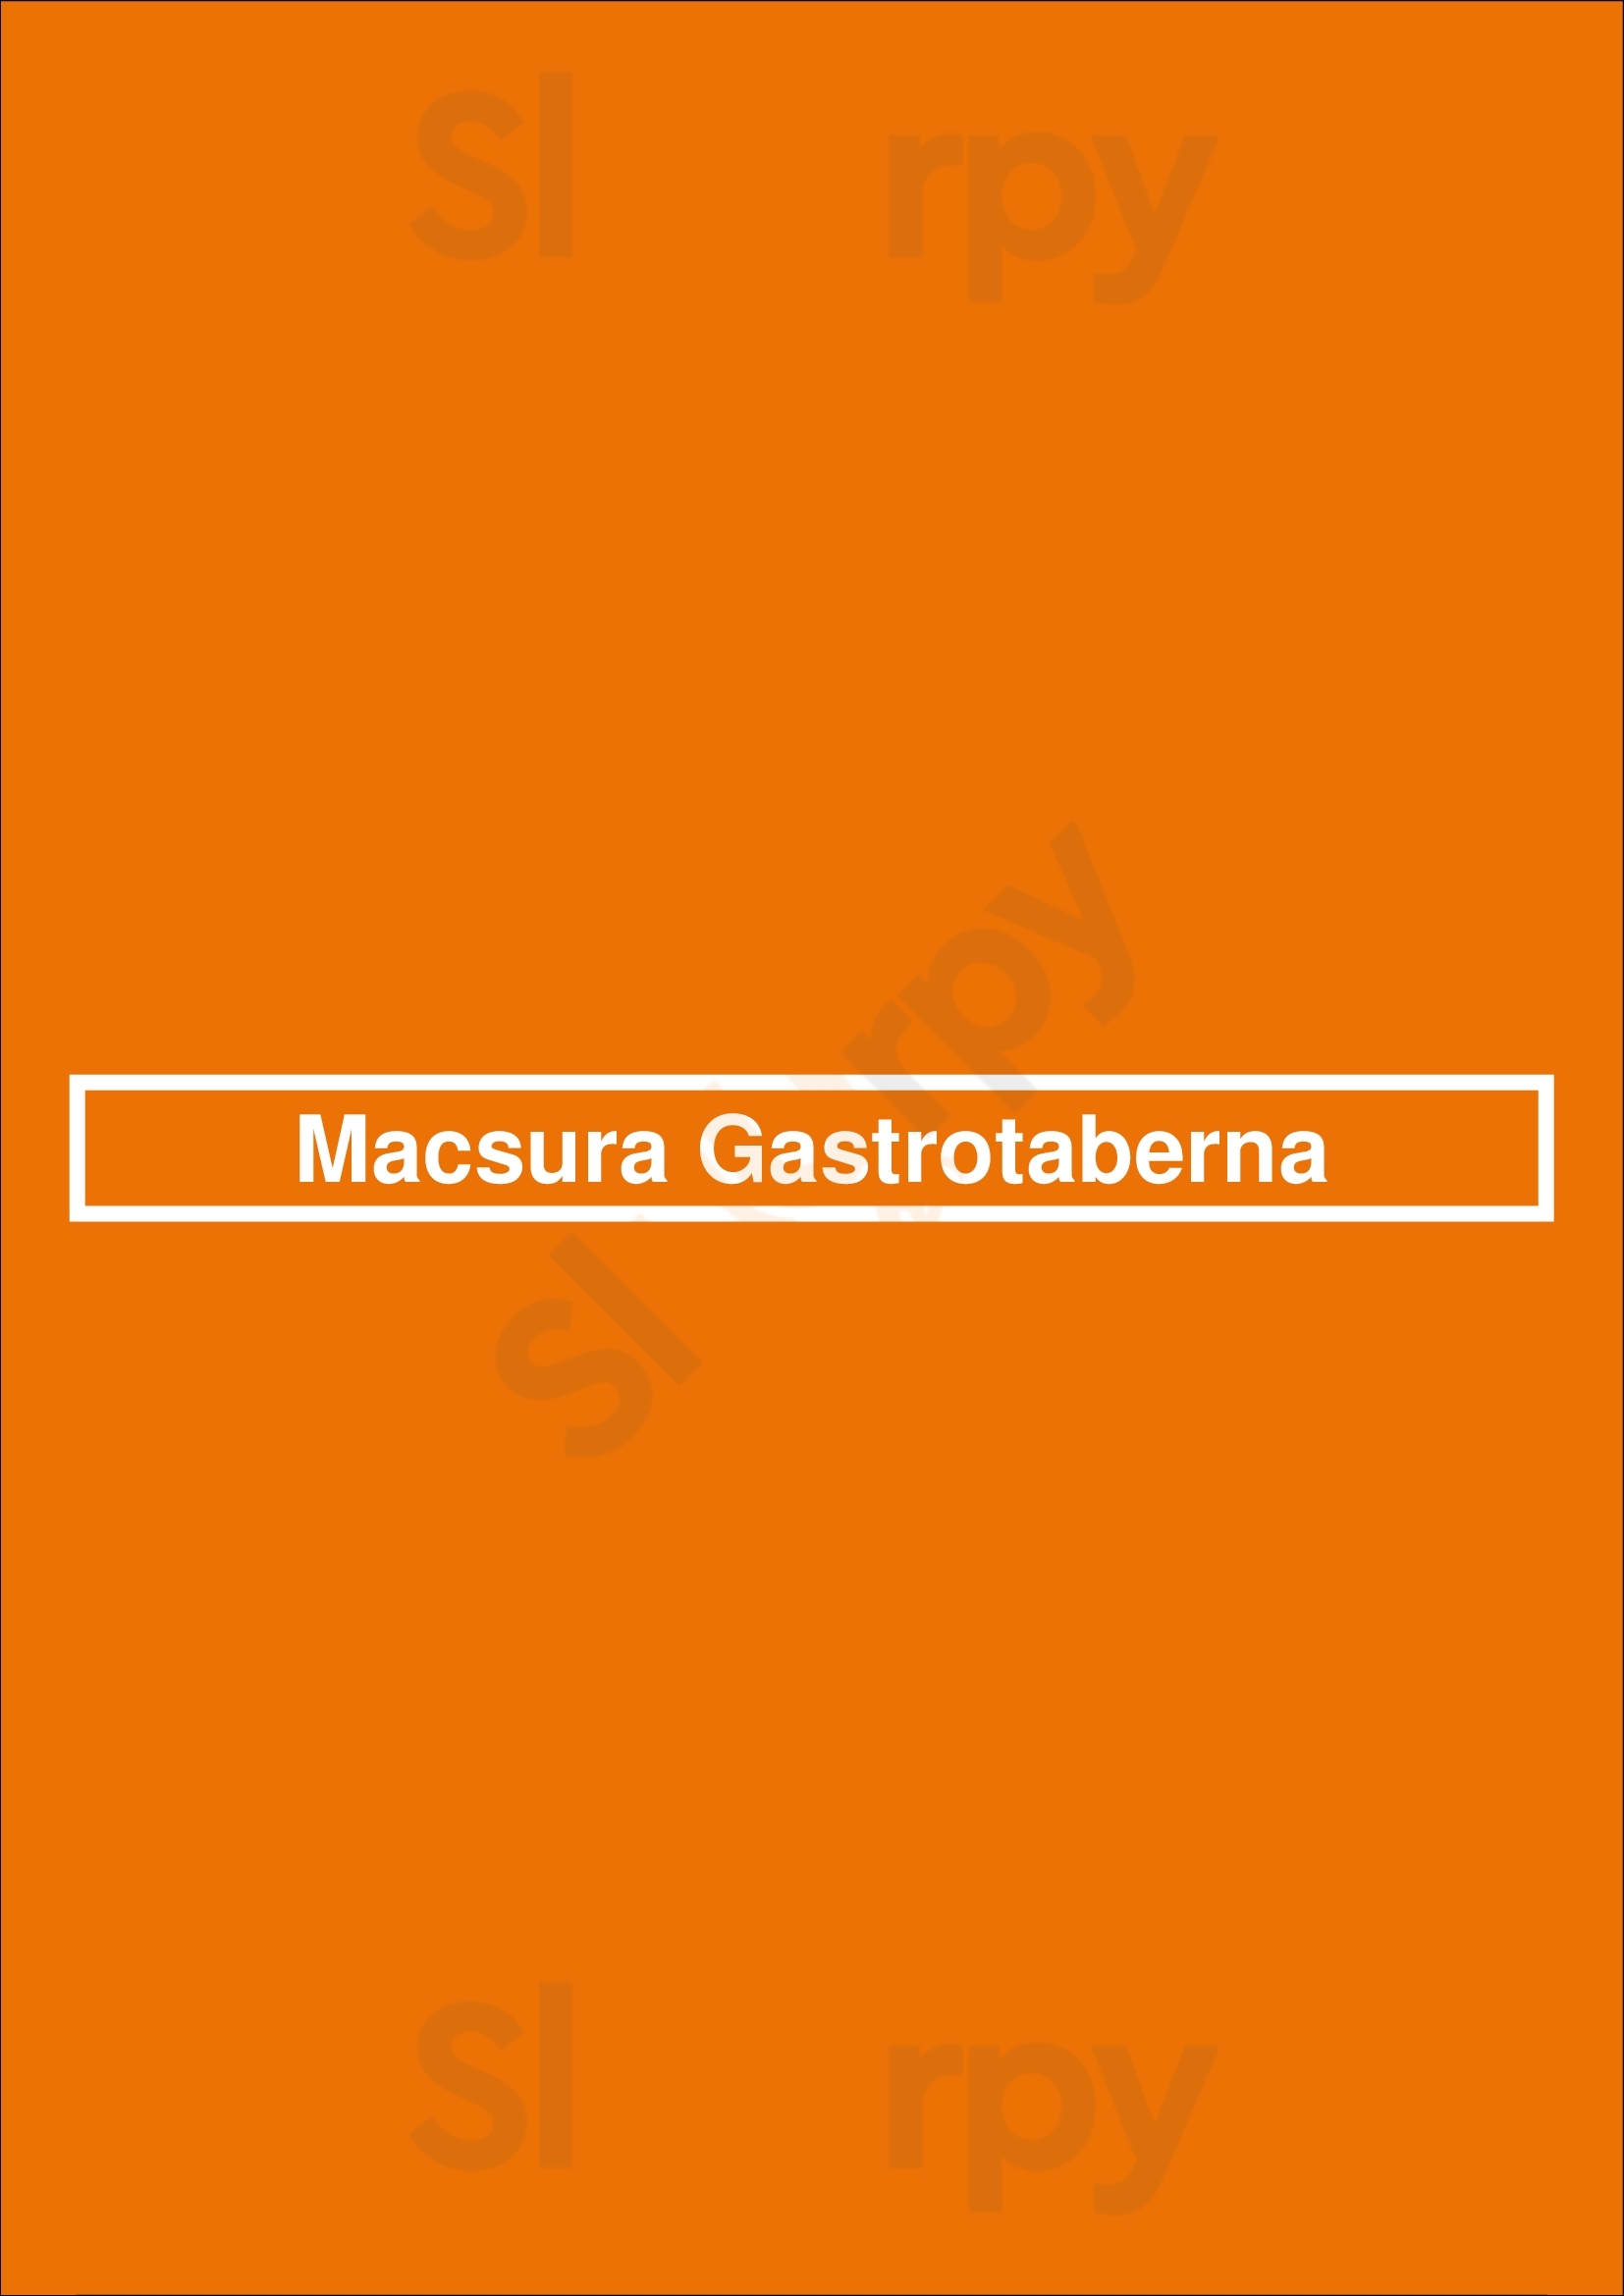 Macsura Gastrotaberna Córdoba Menu - 1